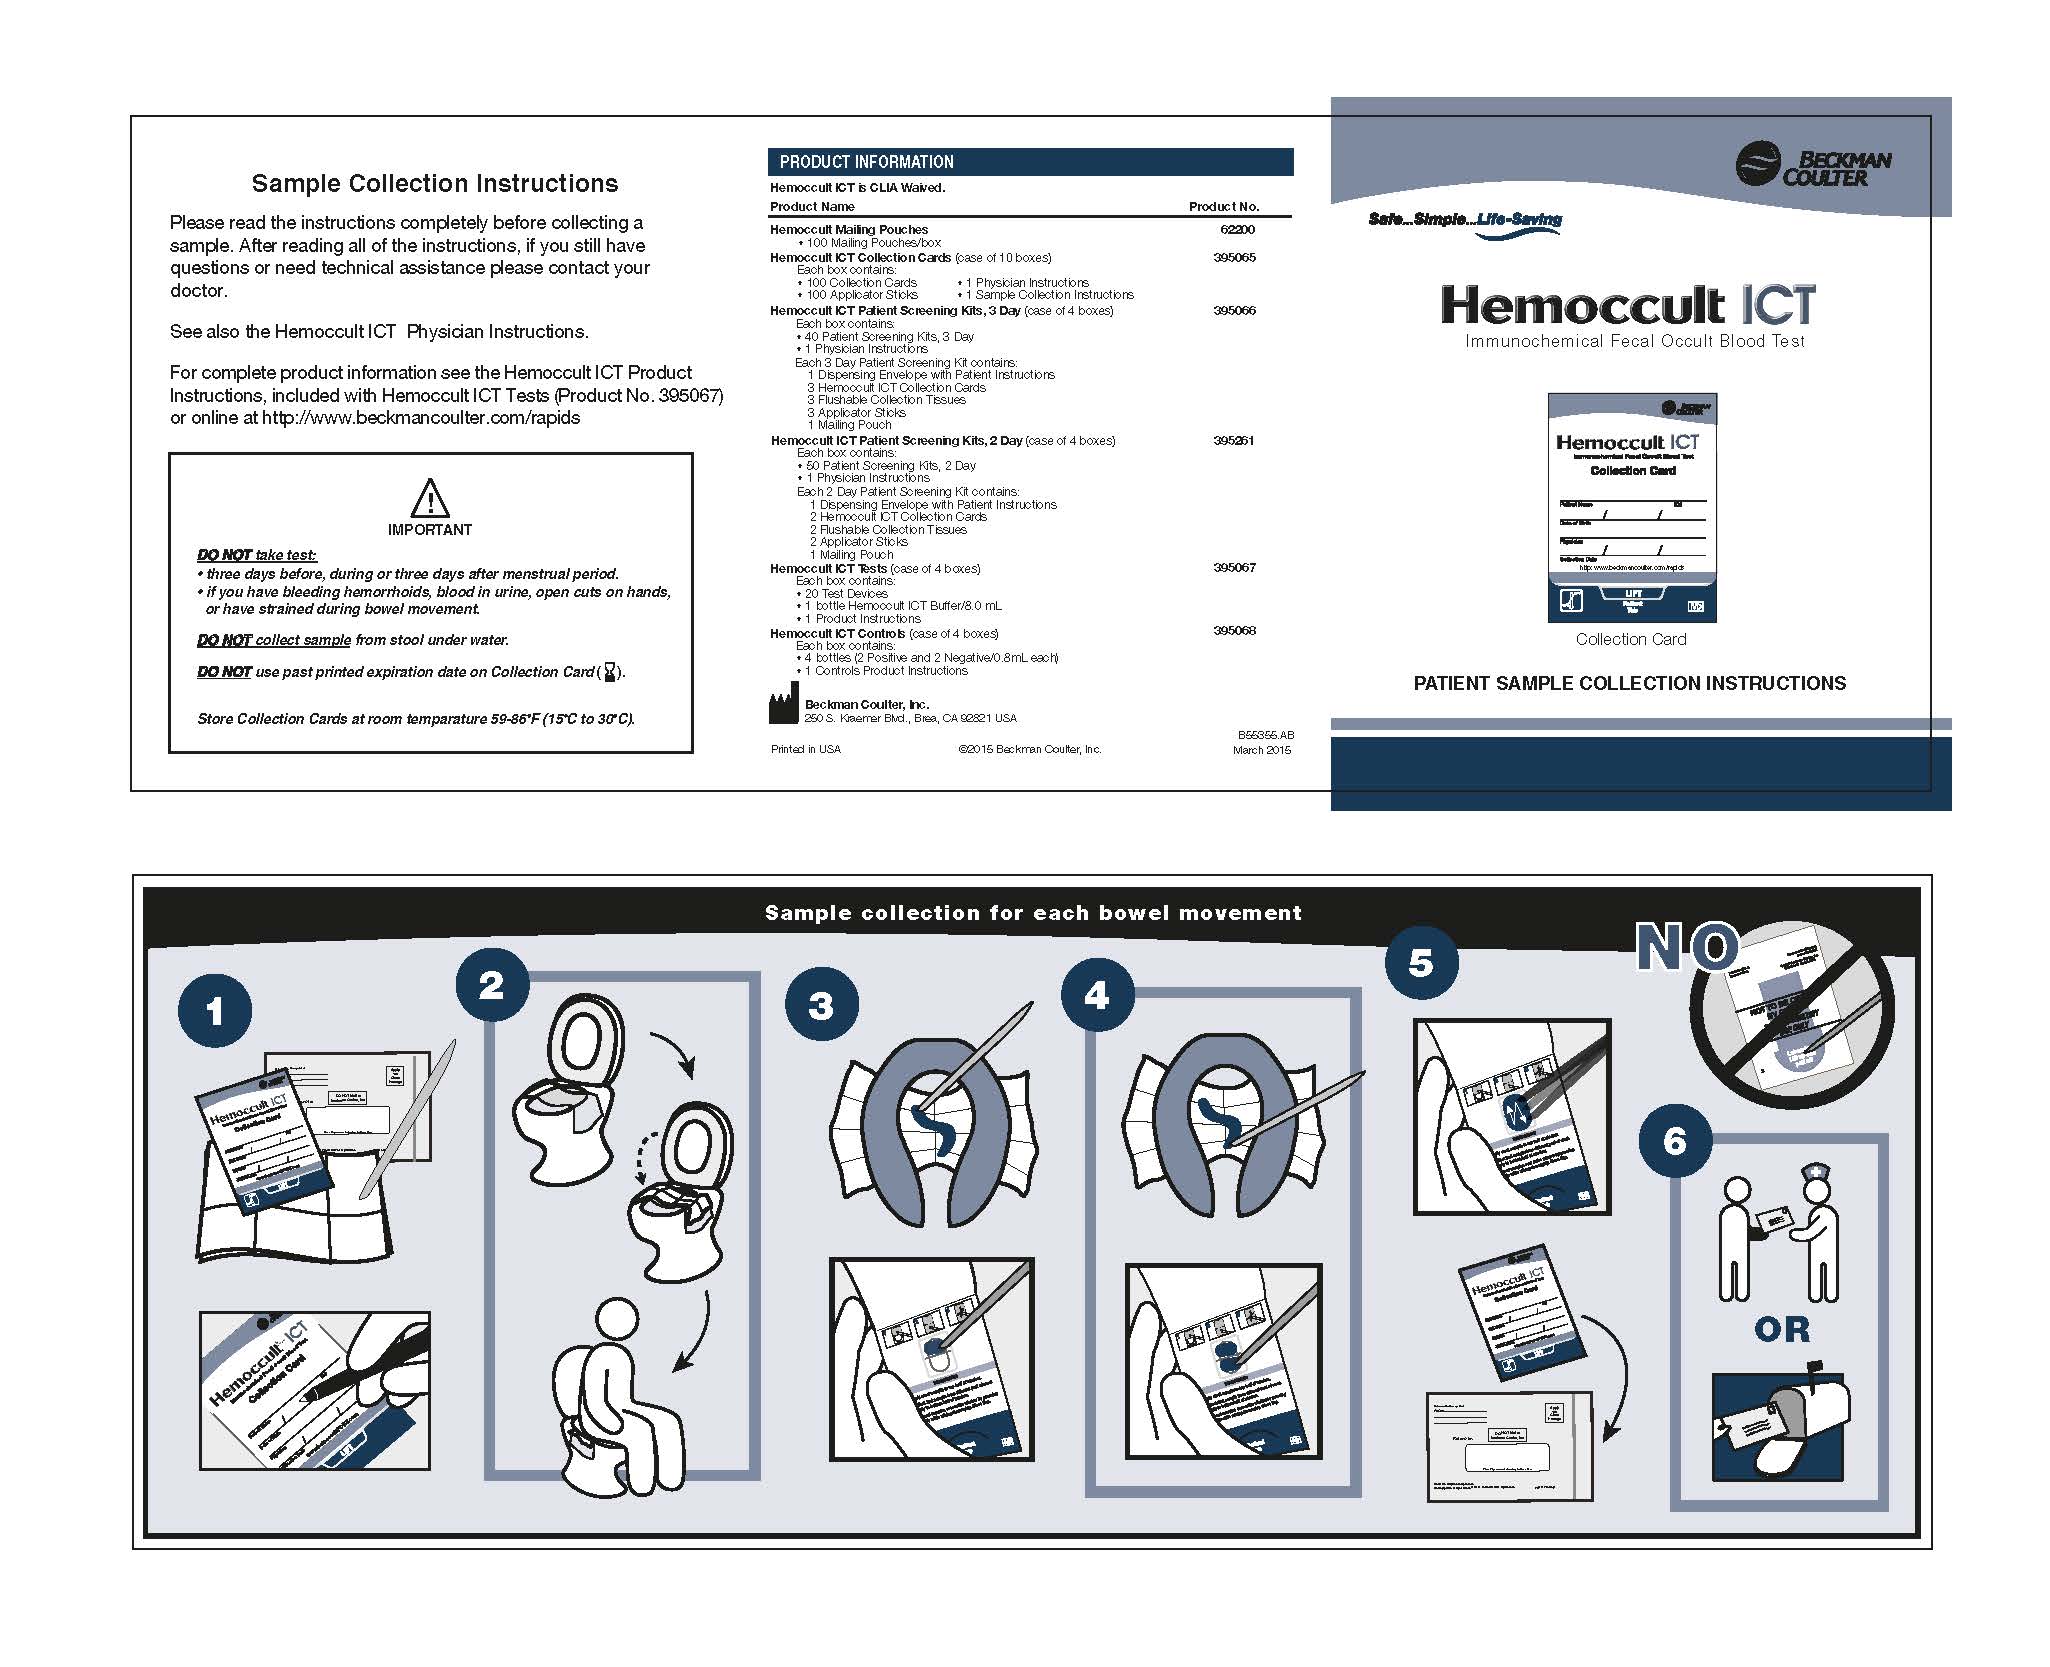 Hemoccult ICT Patient Illustrative Instructions